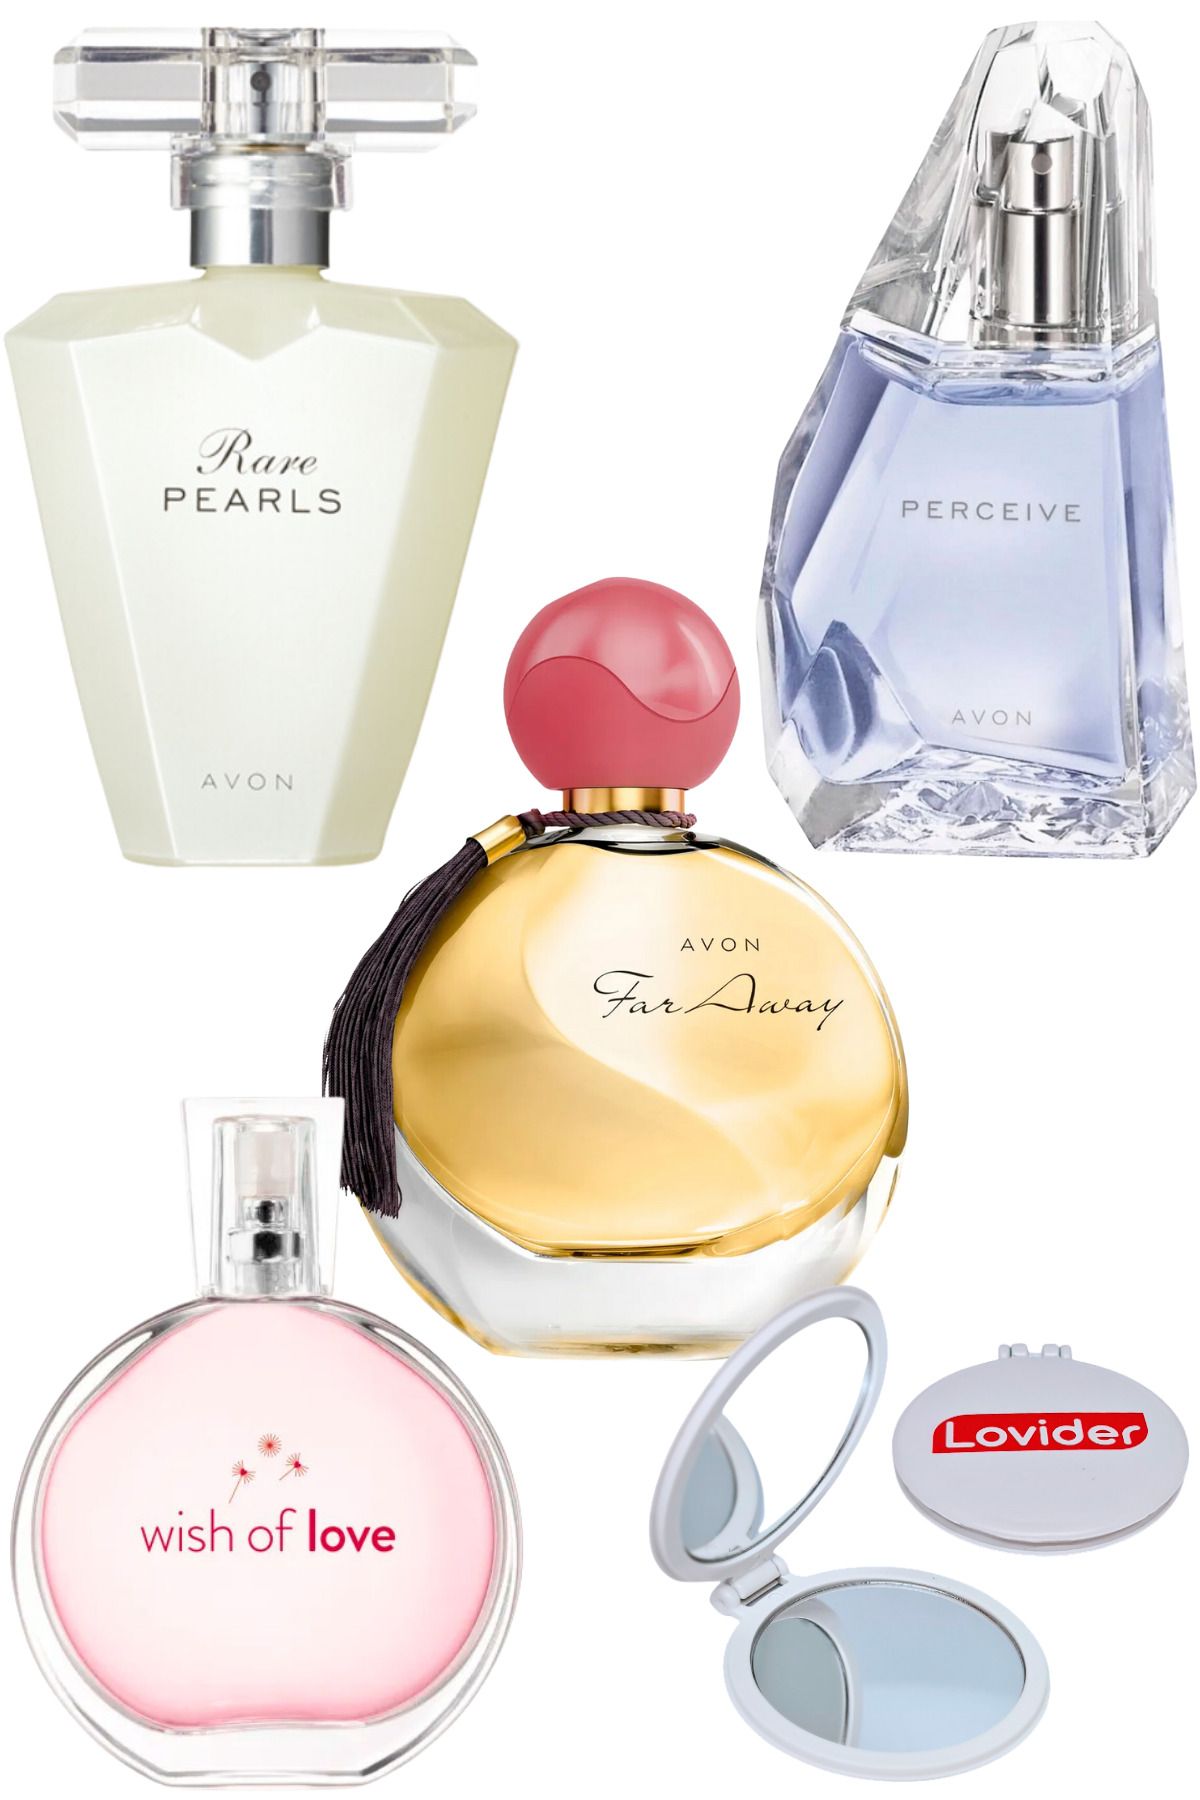 Avon Rare Pearls + Far Away + Perceive + Wish Of Love Kadın Parfüm 50ml + Lovider Cep Aynası